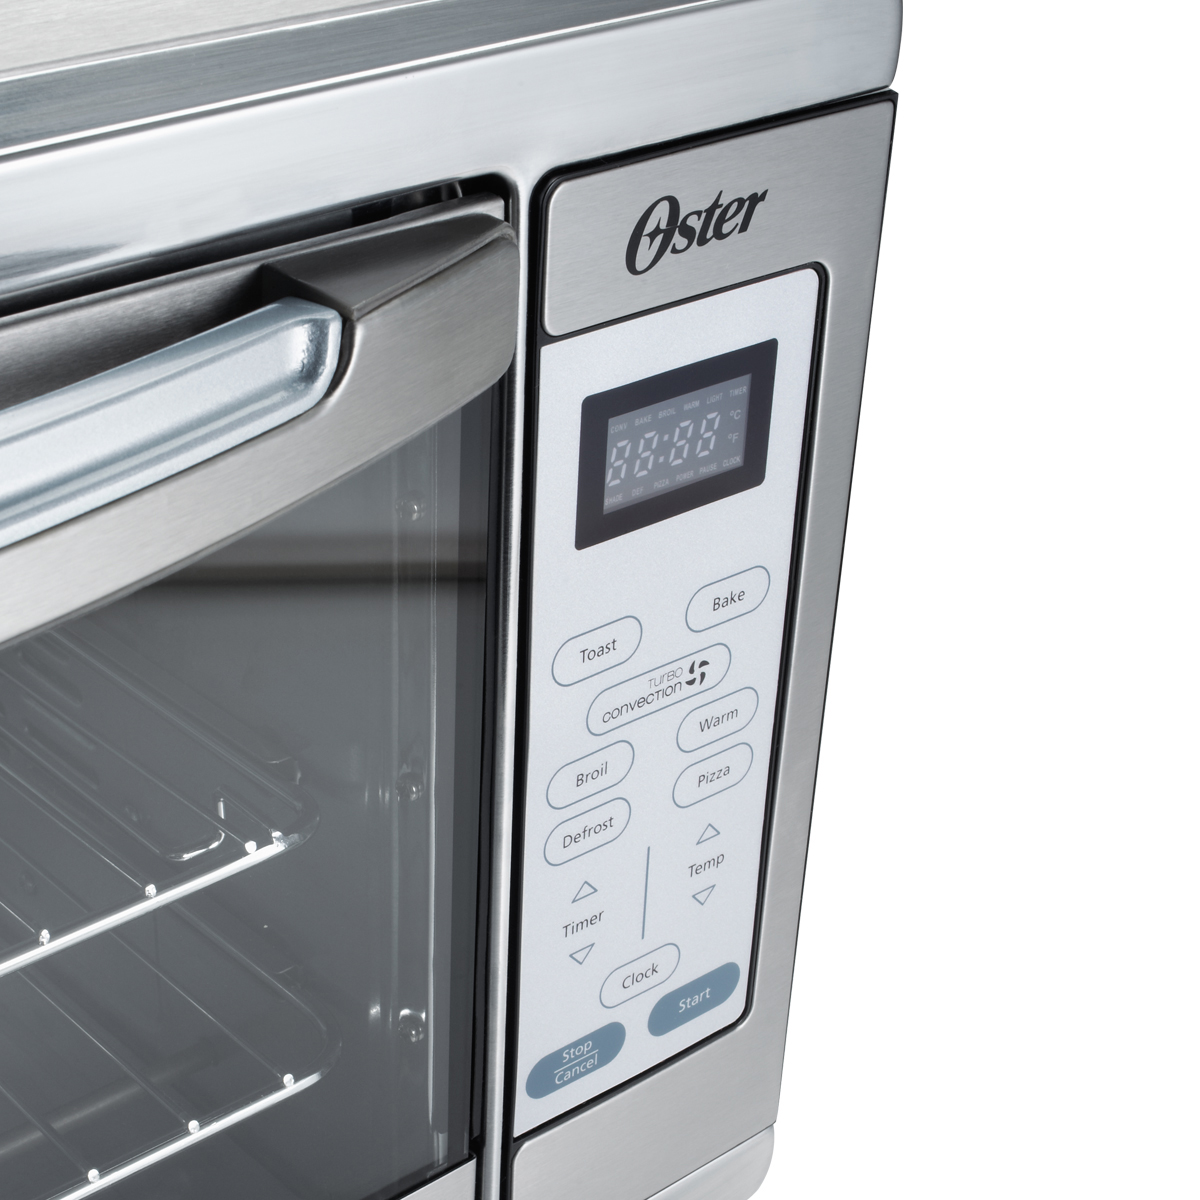 Oster Brushed Stainless Toaster Oven-TSSTTVXLDG - image 4 of 6